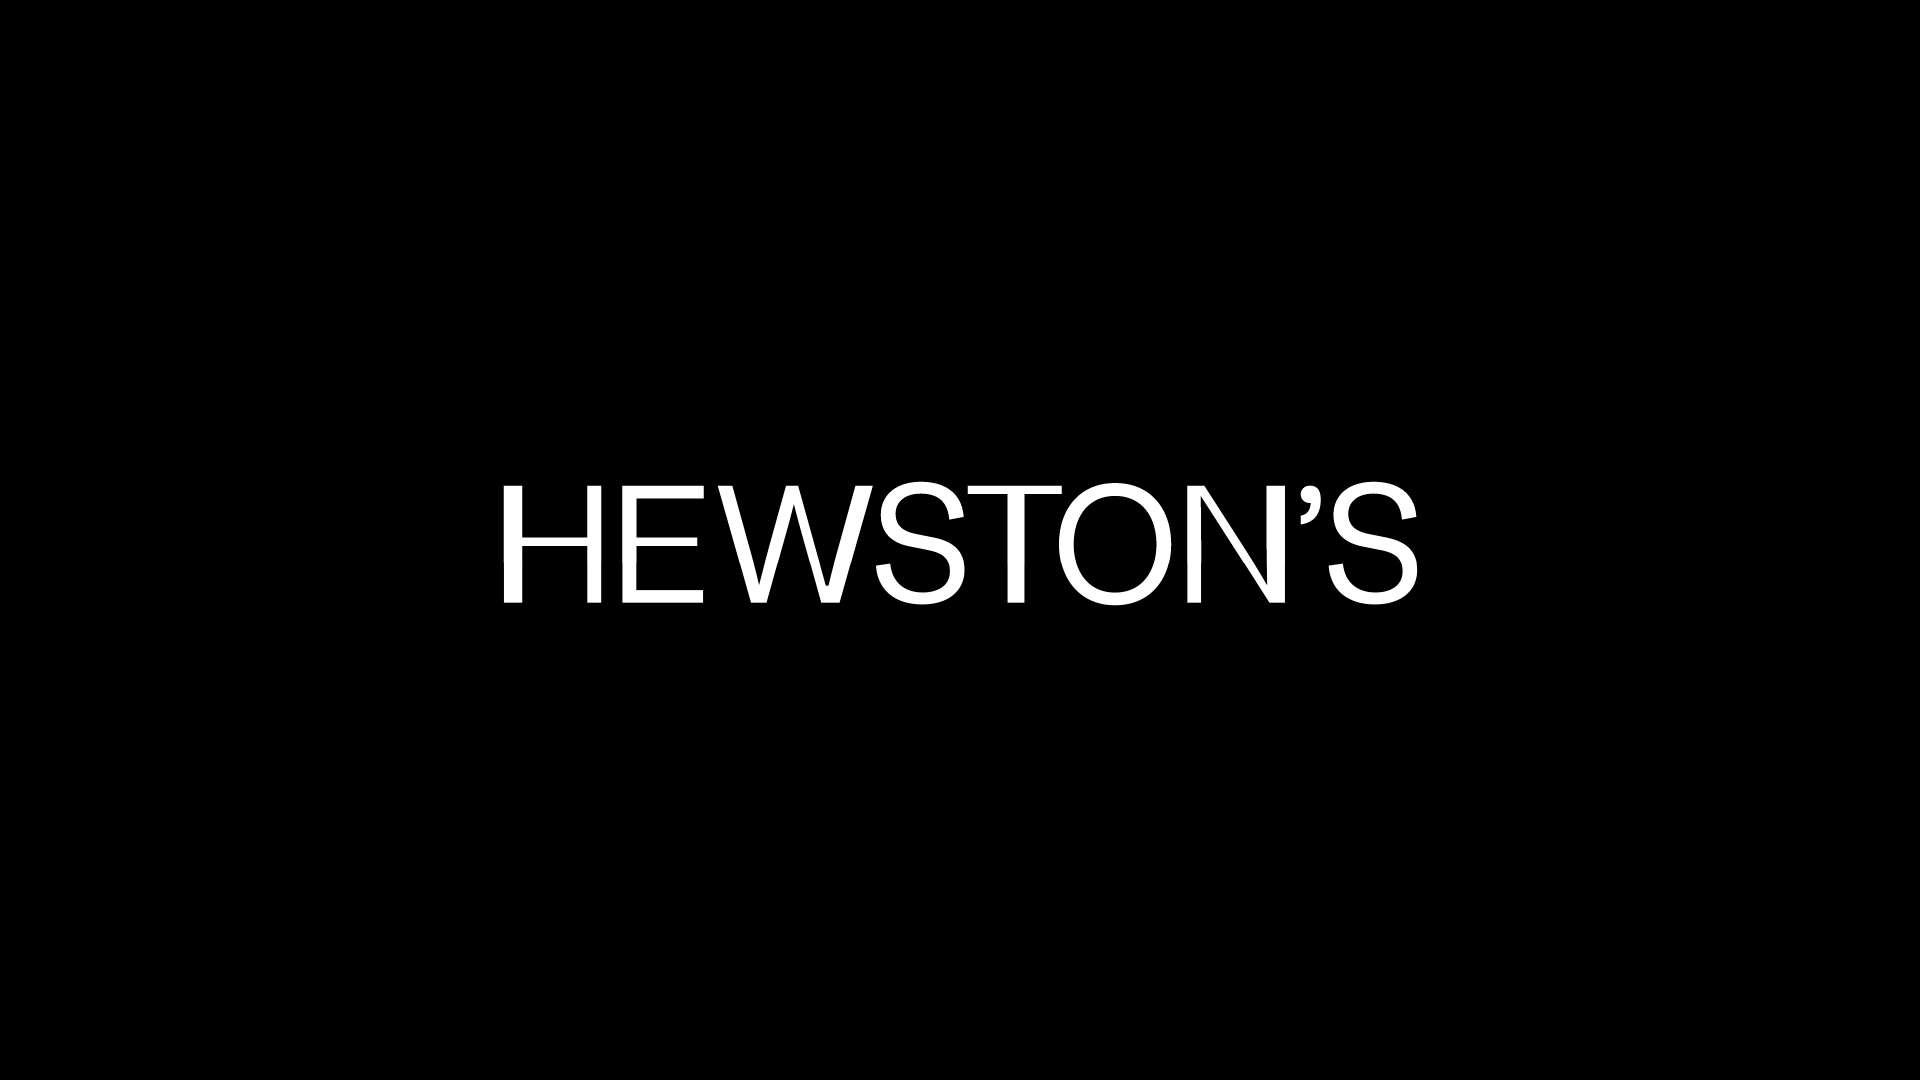 Hewston's | Latente Studio